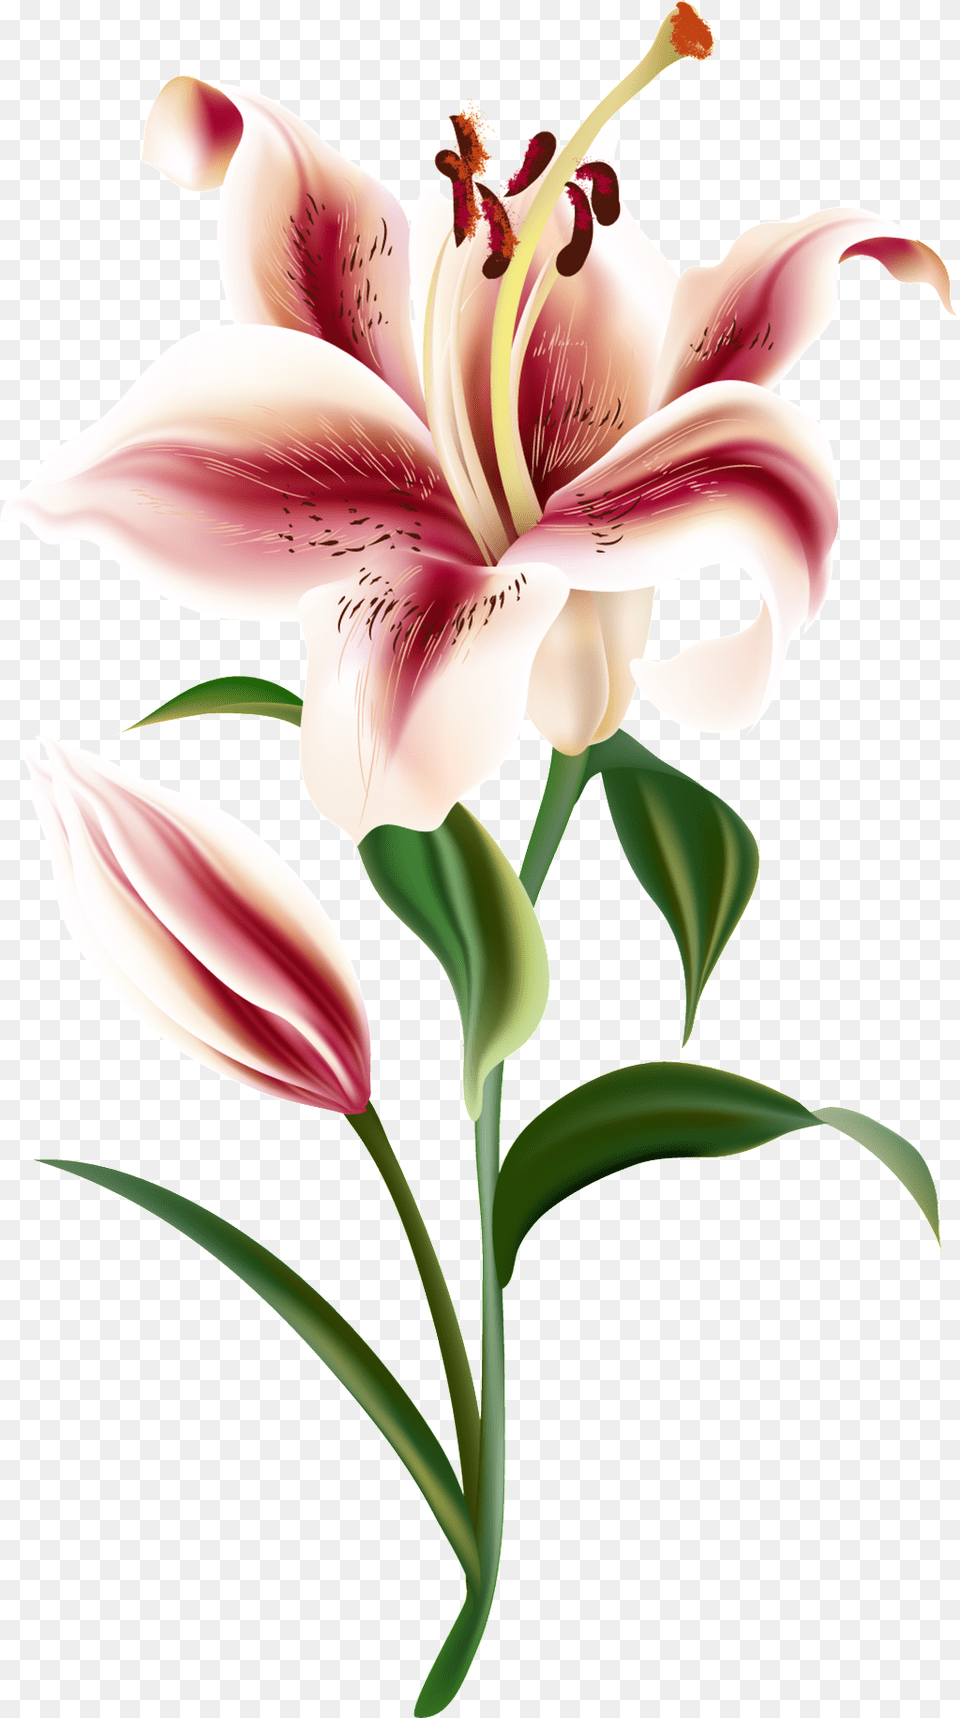 Un Transparente Ornamental Para Un Corazon Rojo Vector Lily Flower Shutterstock, Plant, Anther, Petal, Person Free Transparent Png